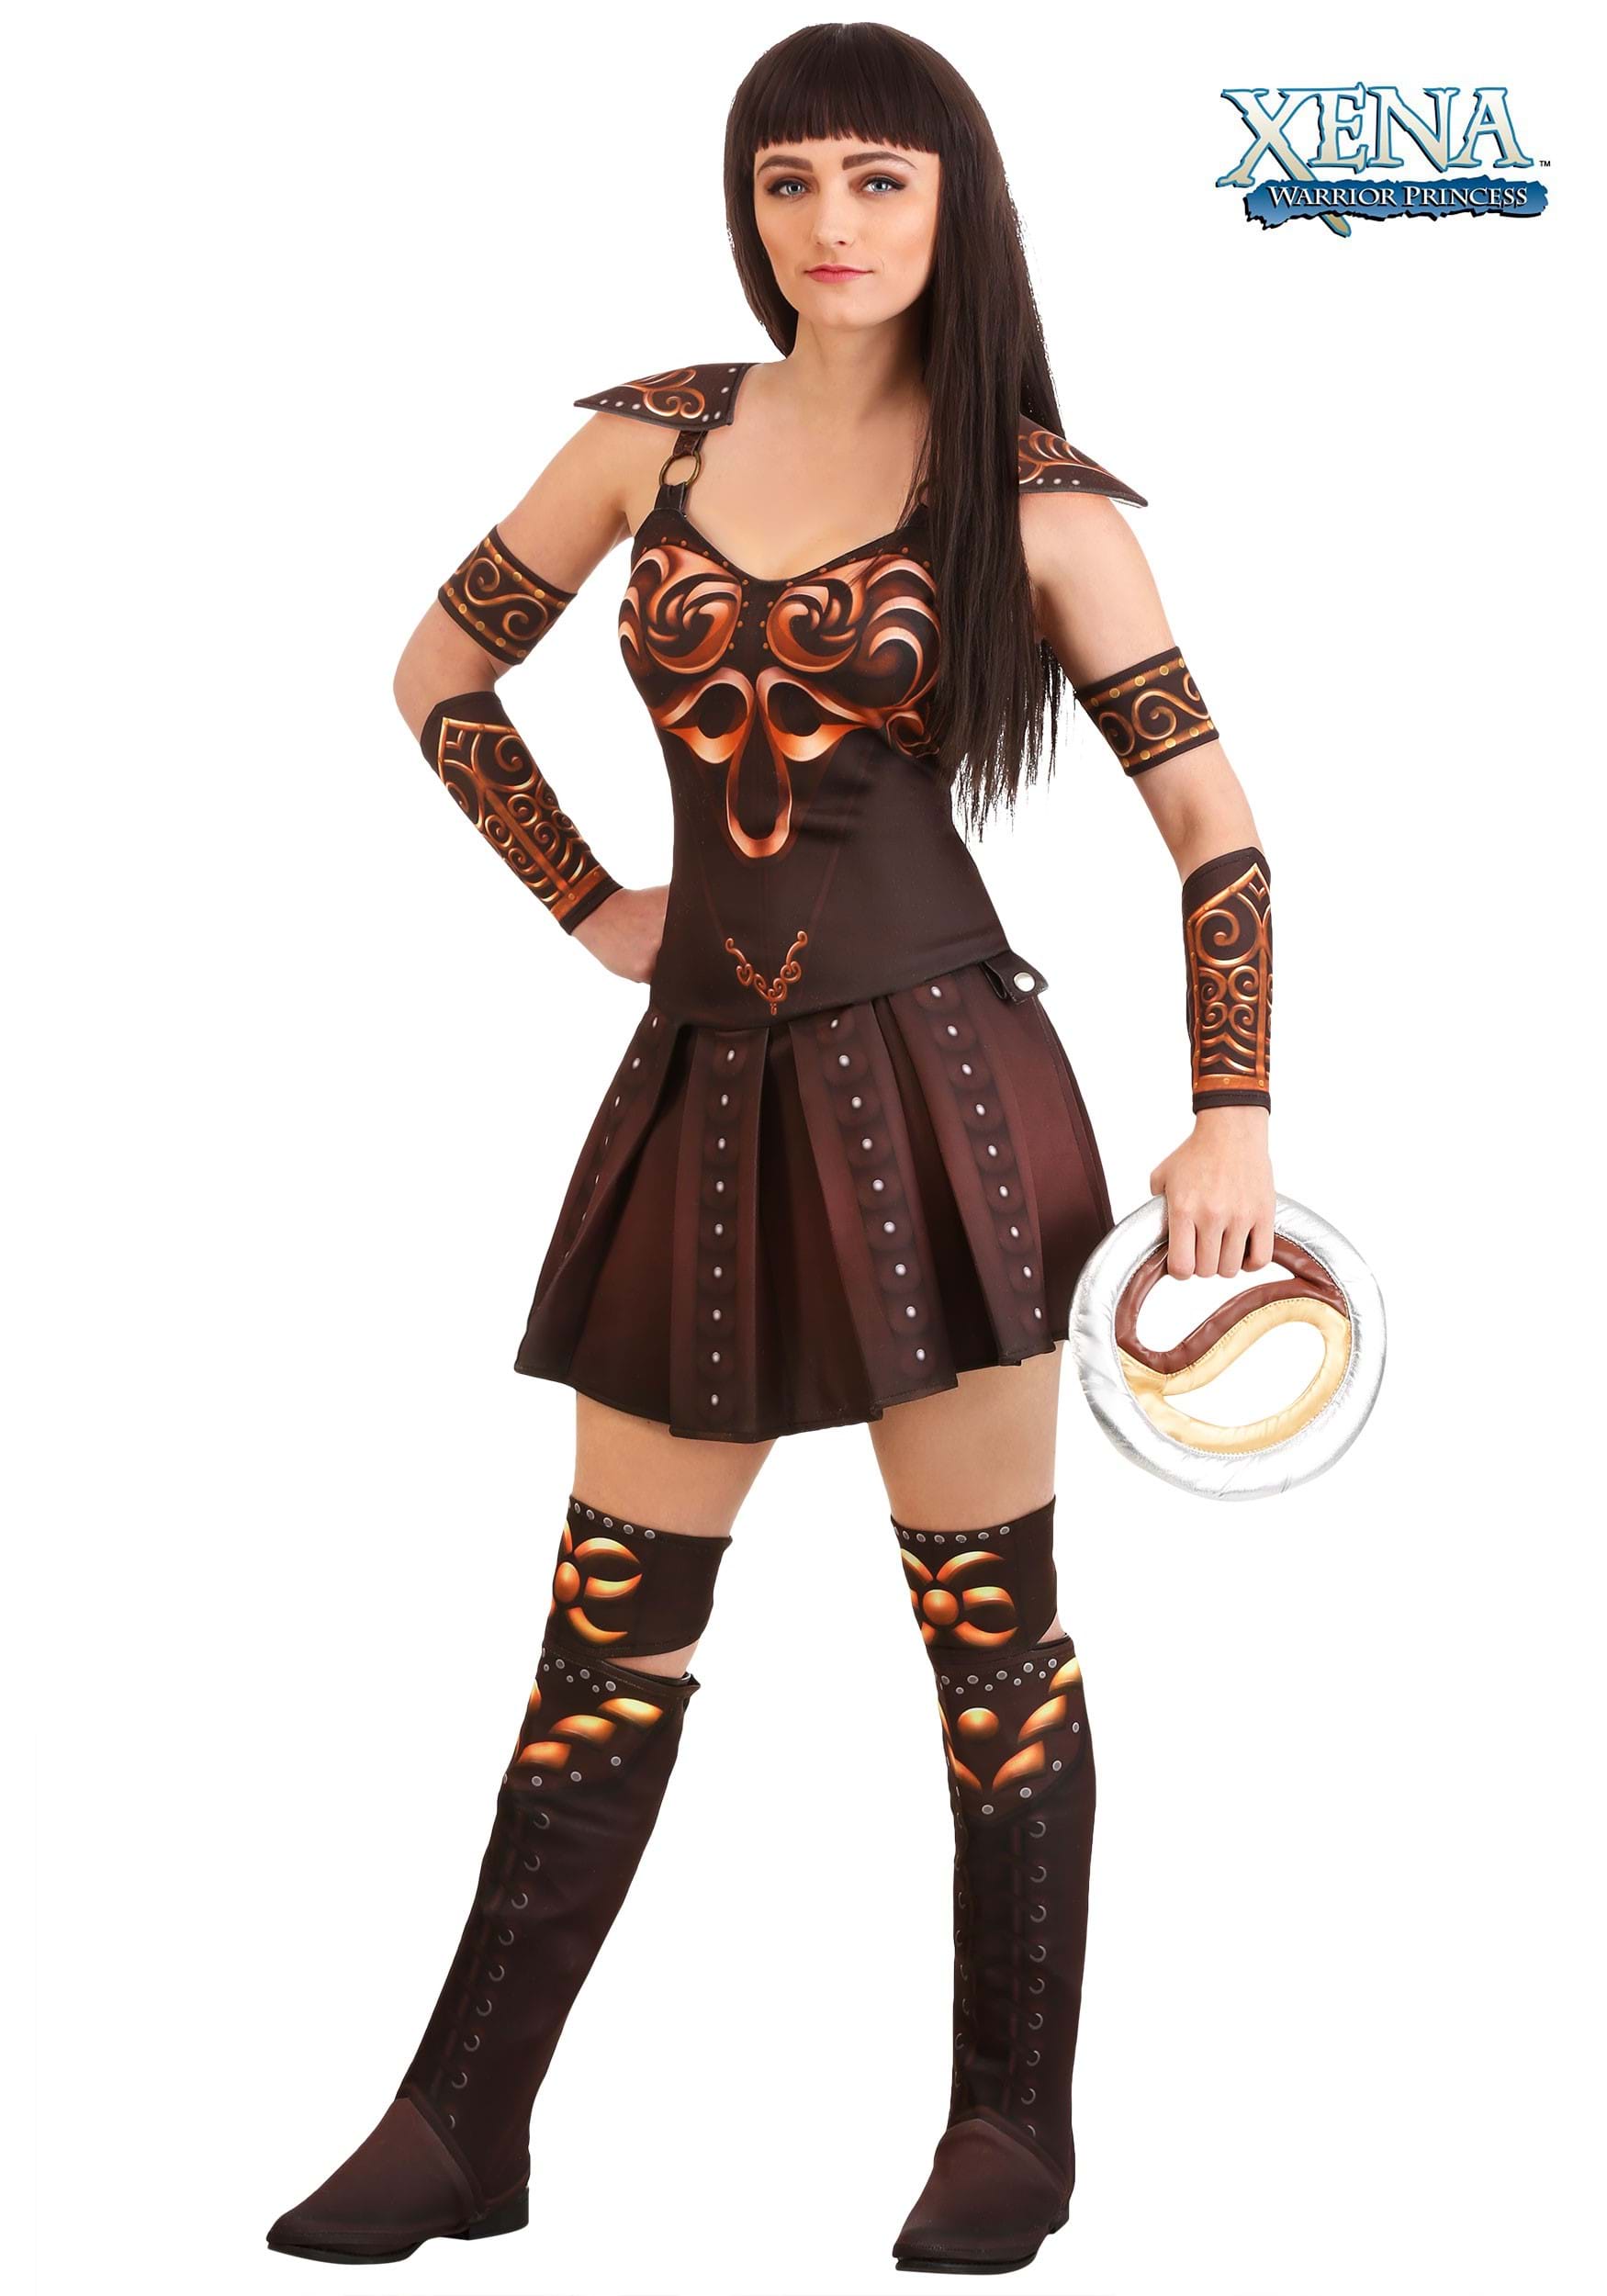 Xena Warrior Princess Women's Costume